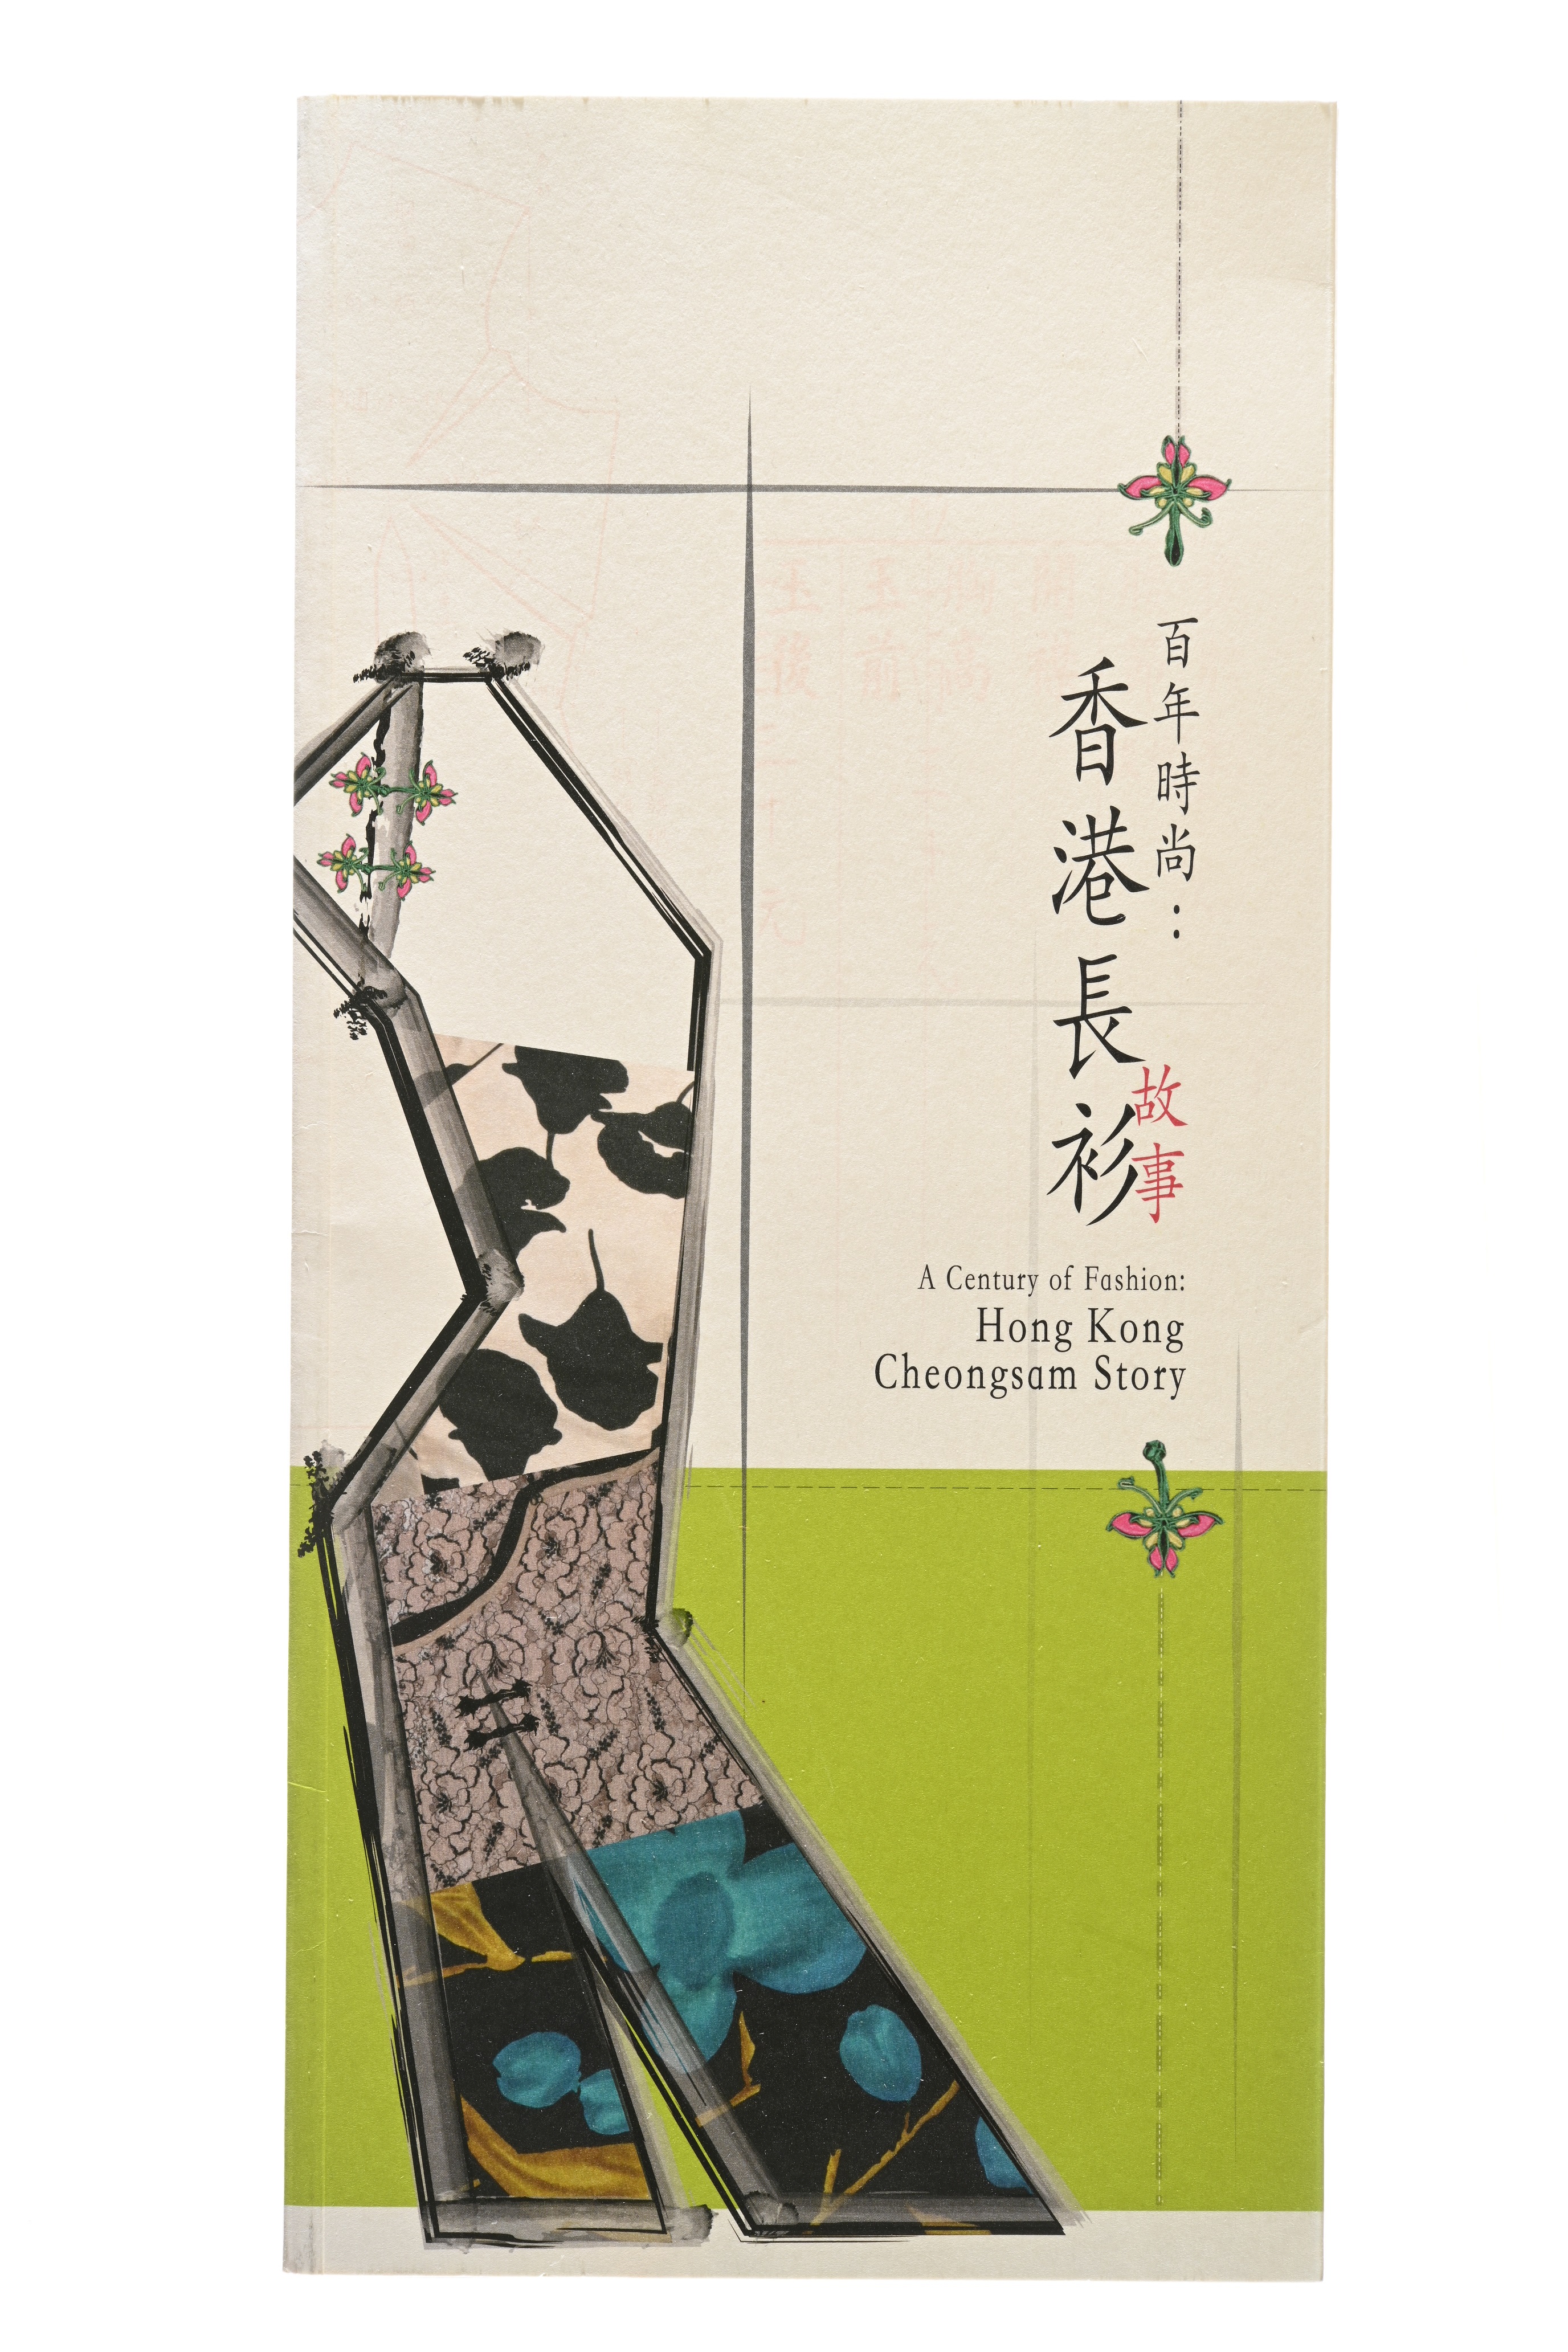 A Century of Fashion: Hong Kong Cheongsam Story Exhibition Catalogue